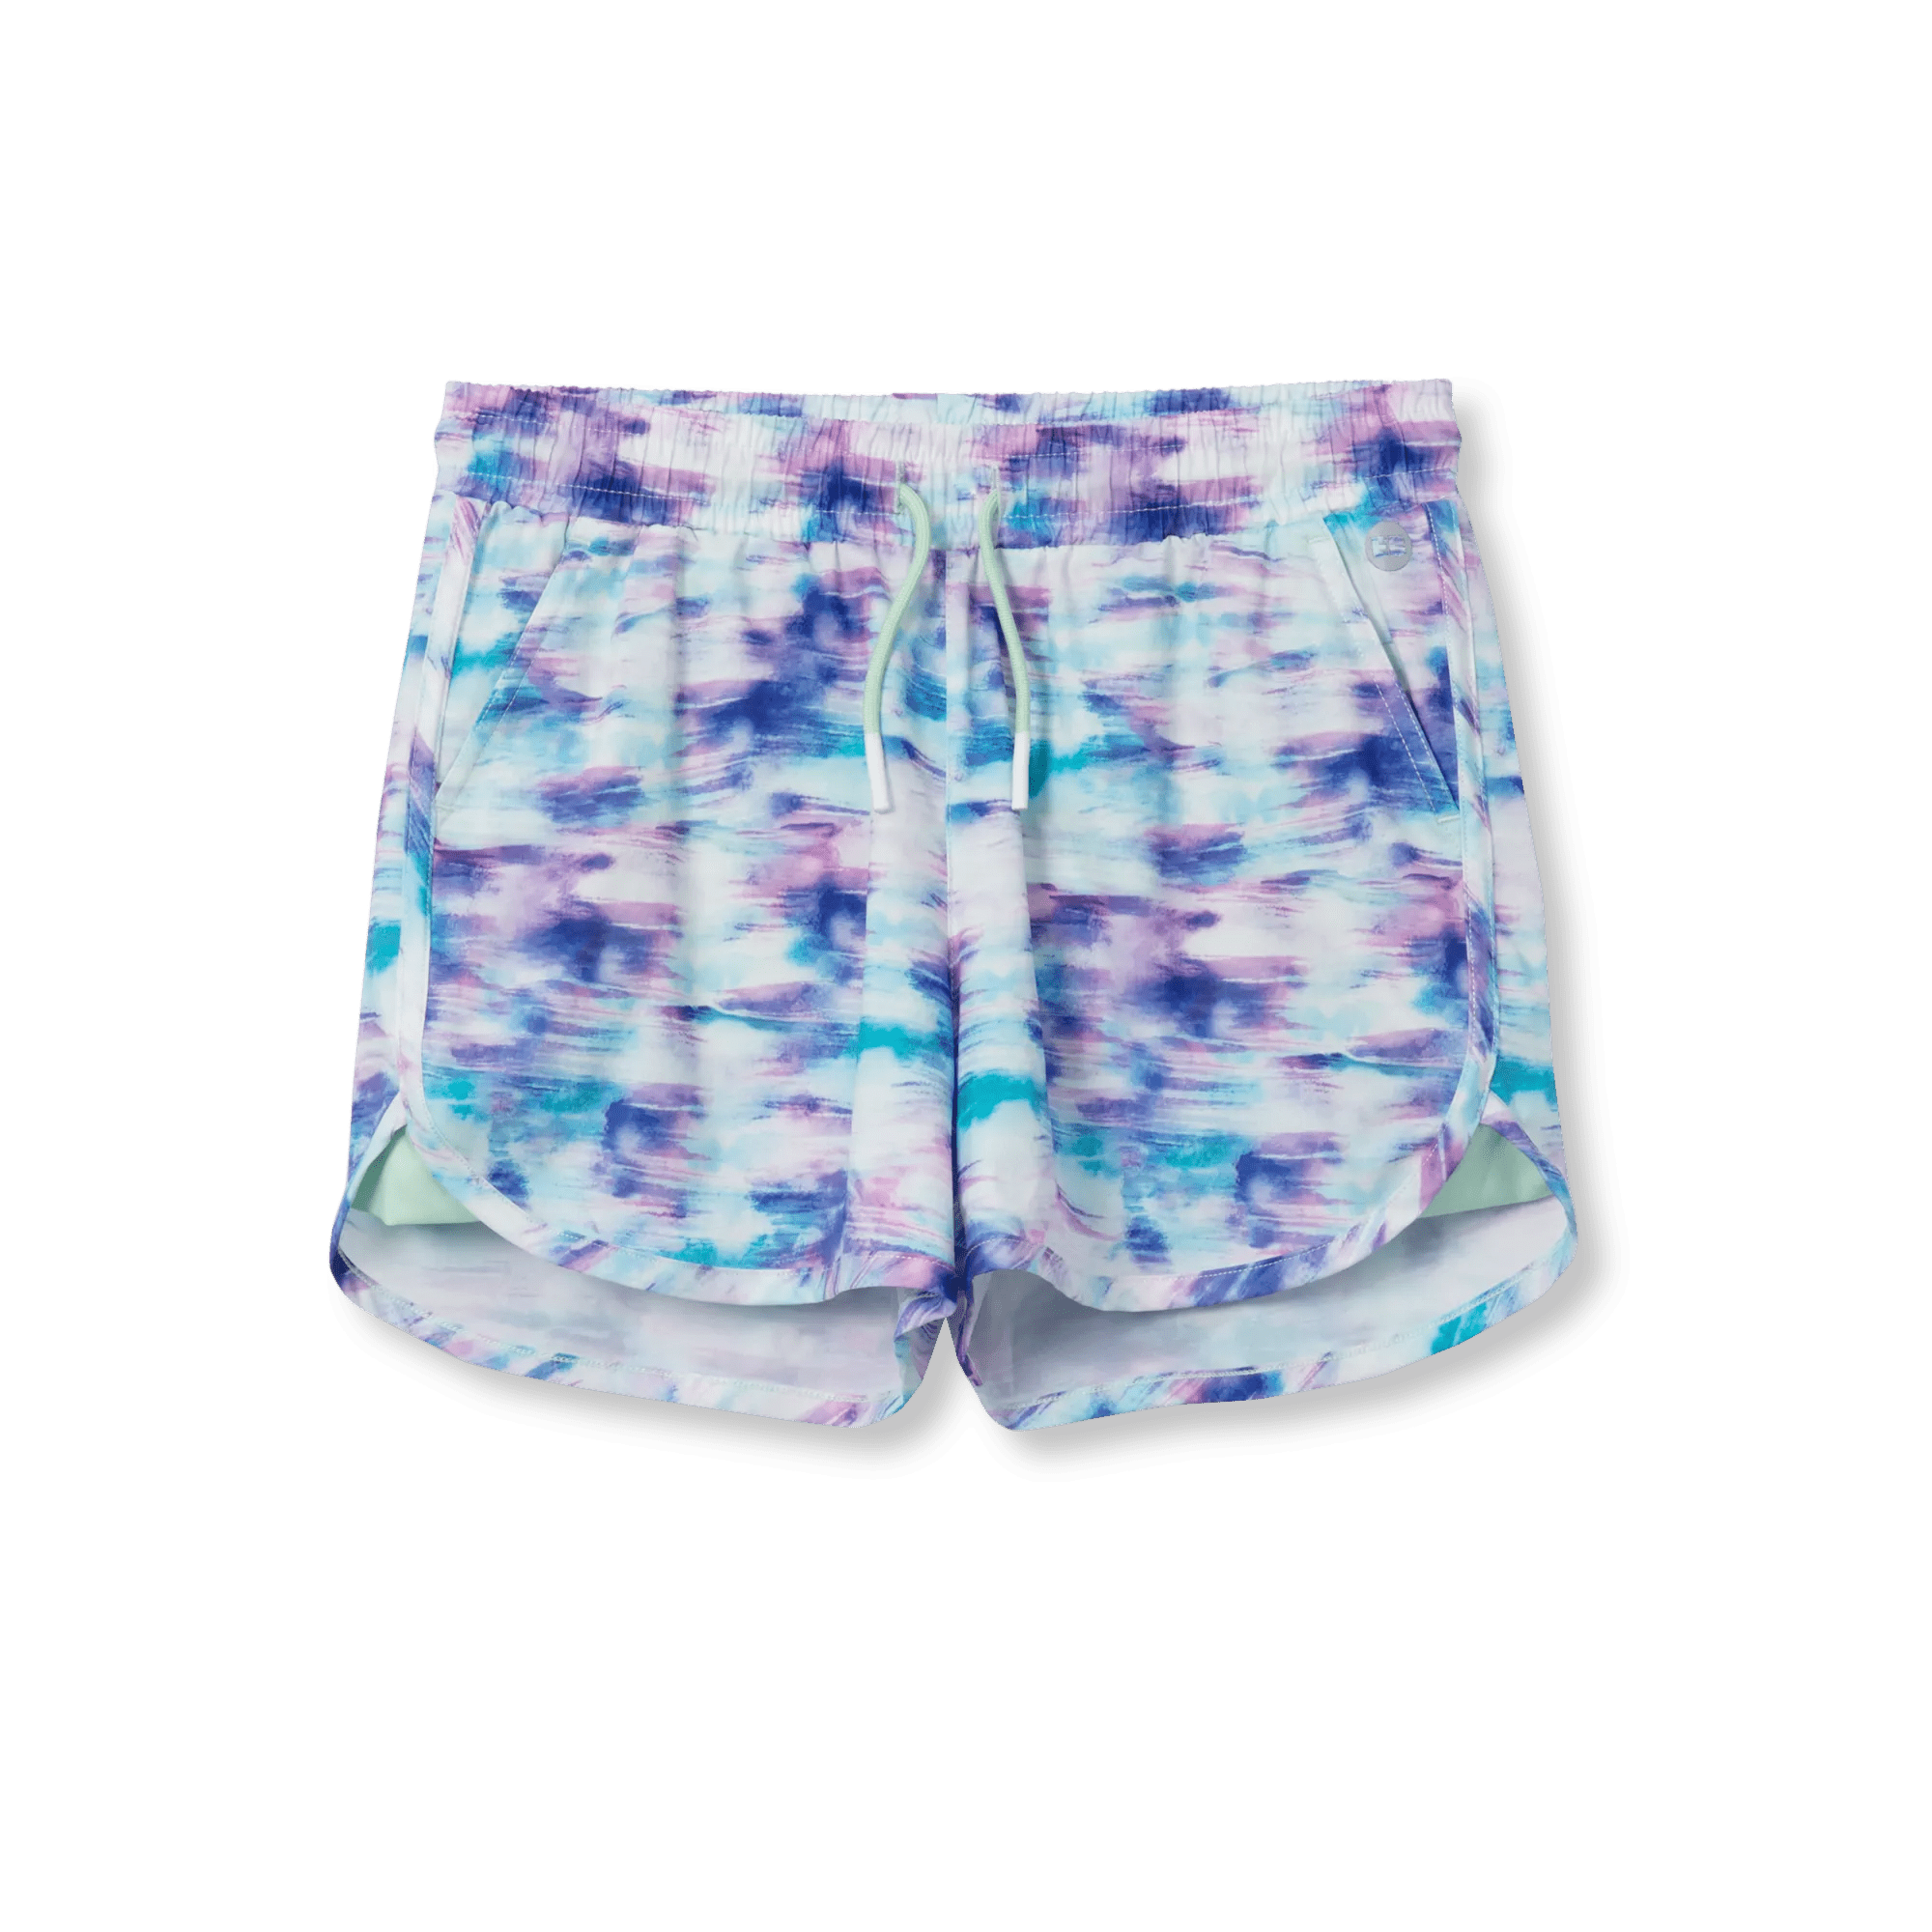 Adventurer 2.0 Shorts - Print